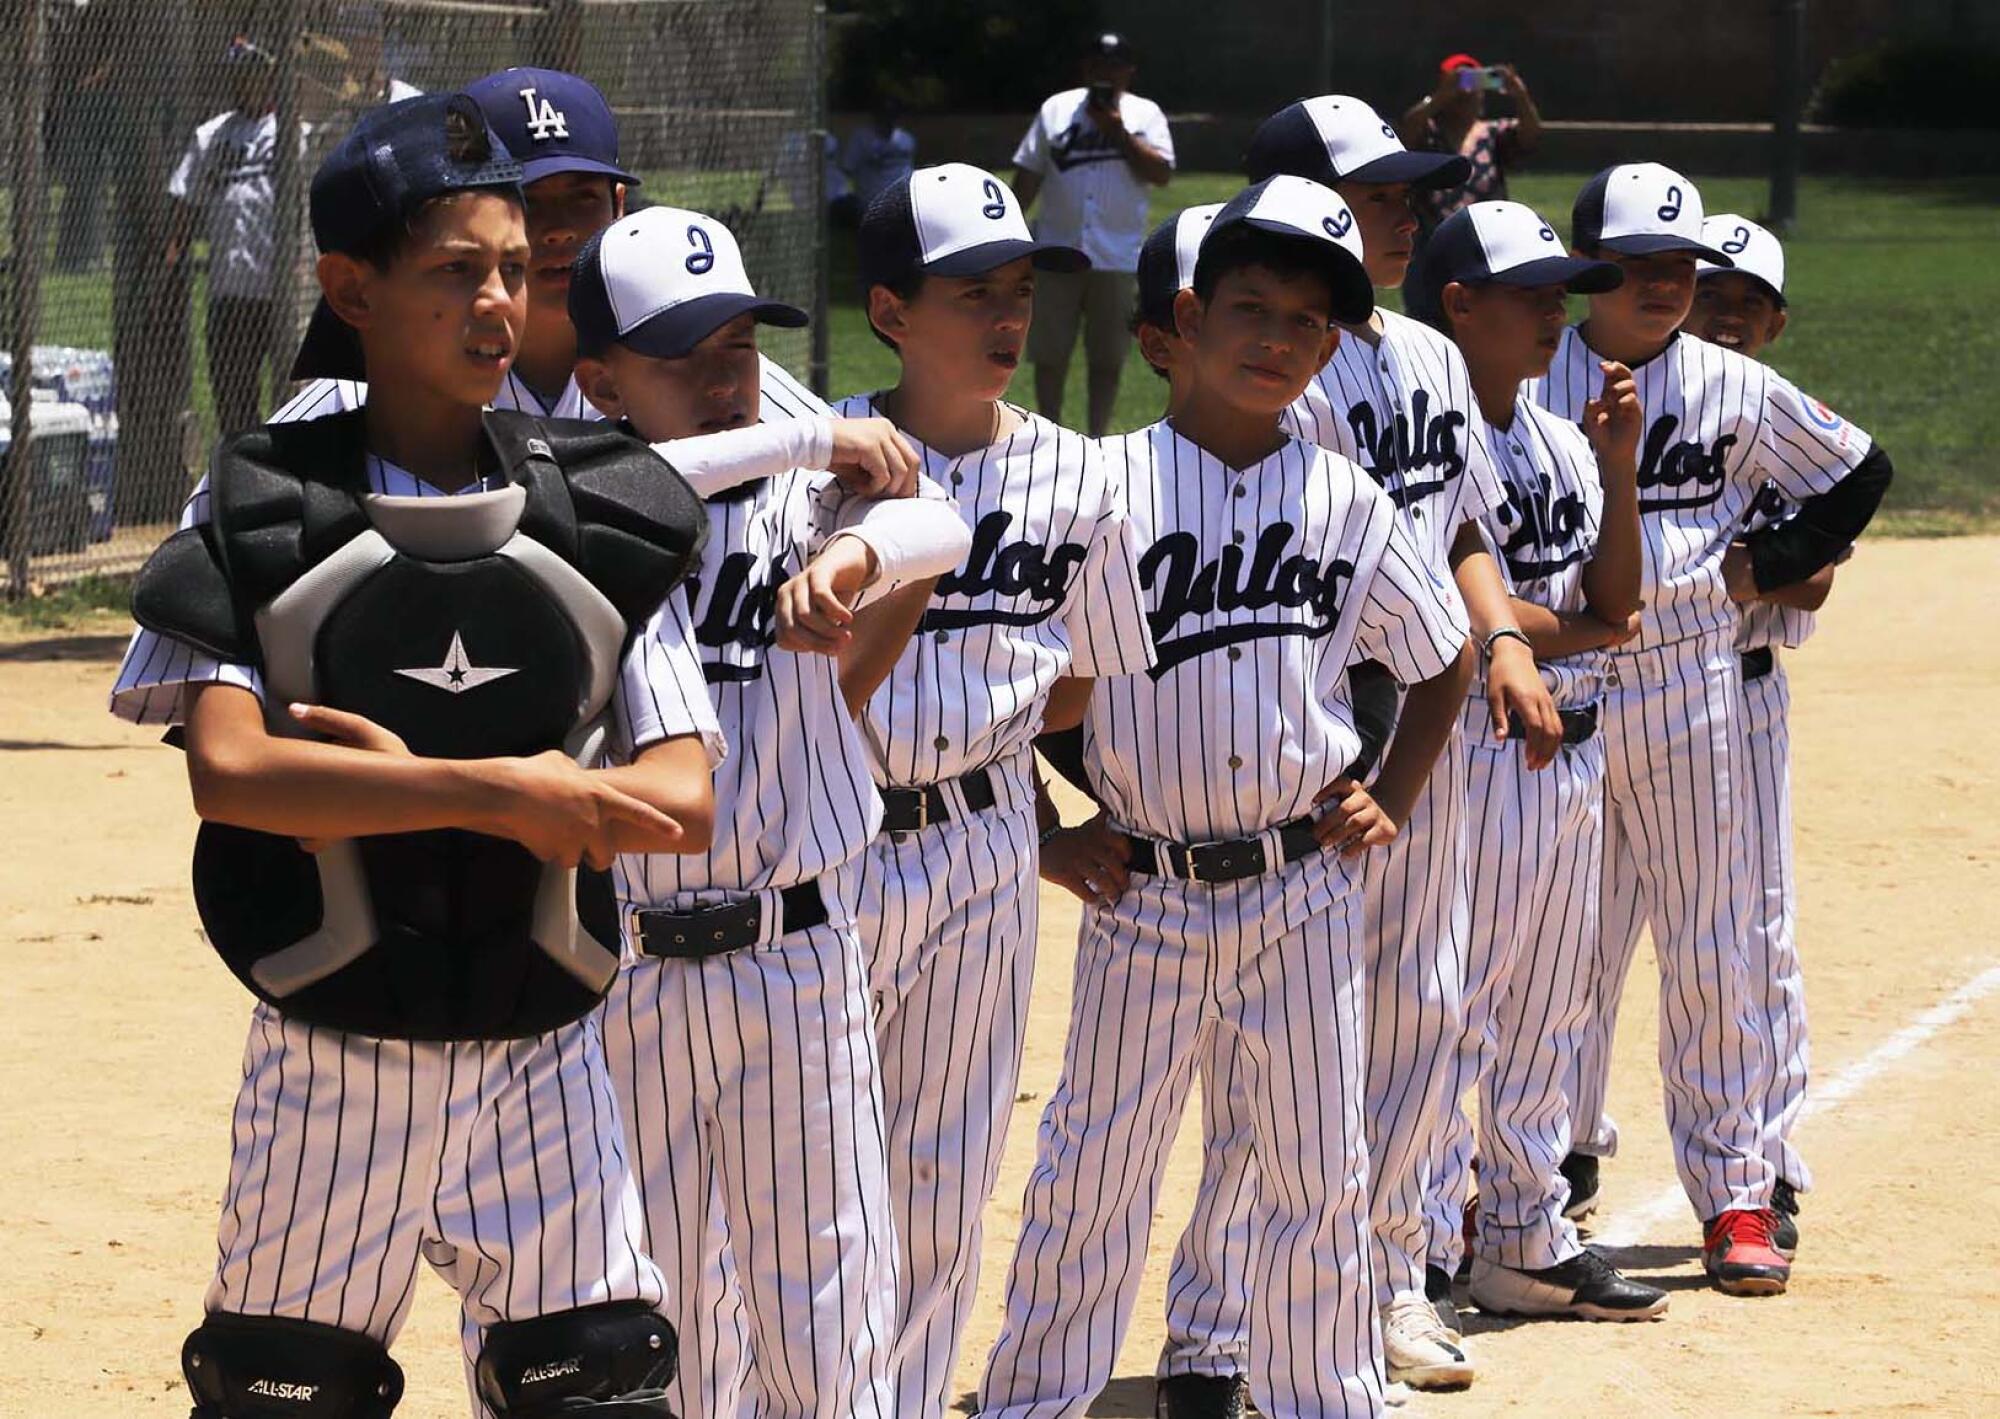 Youth baseball players lined up on baseline. 